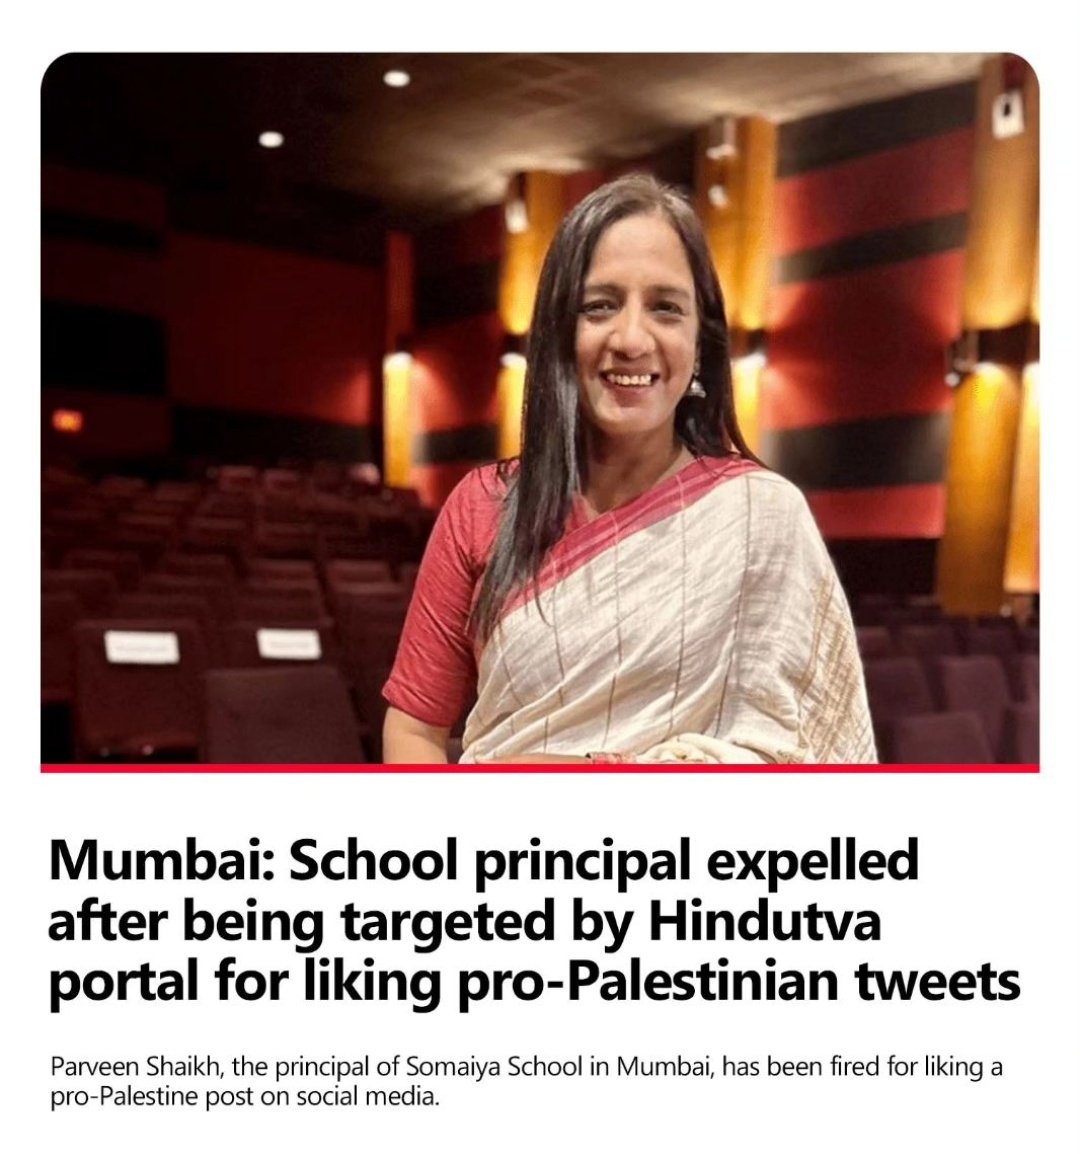 Islamophobia in India 

A Muslim Principal was sacked for liking Pro-Palestine posts on social media #shamondemocracy